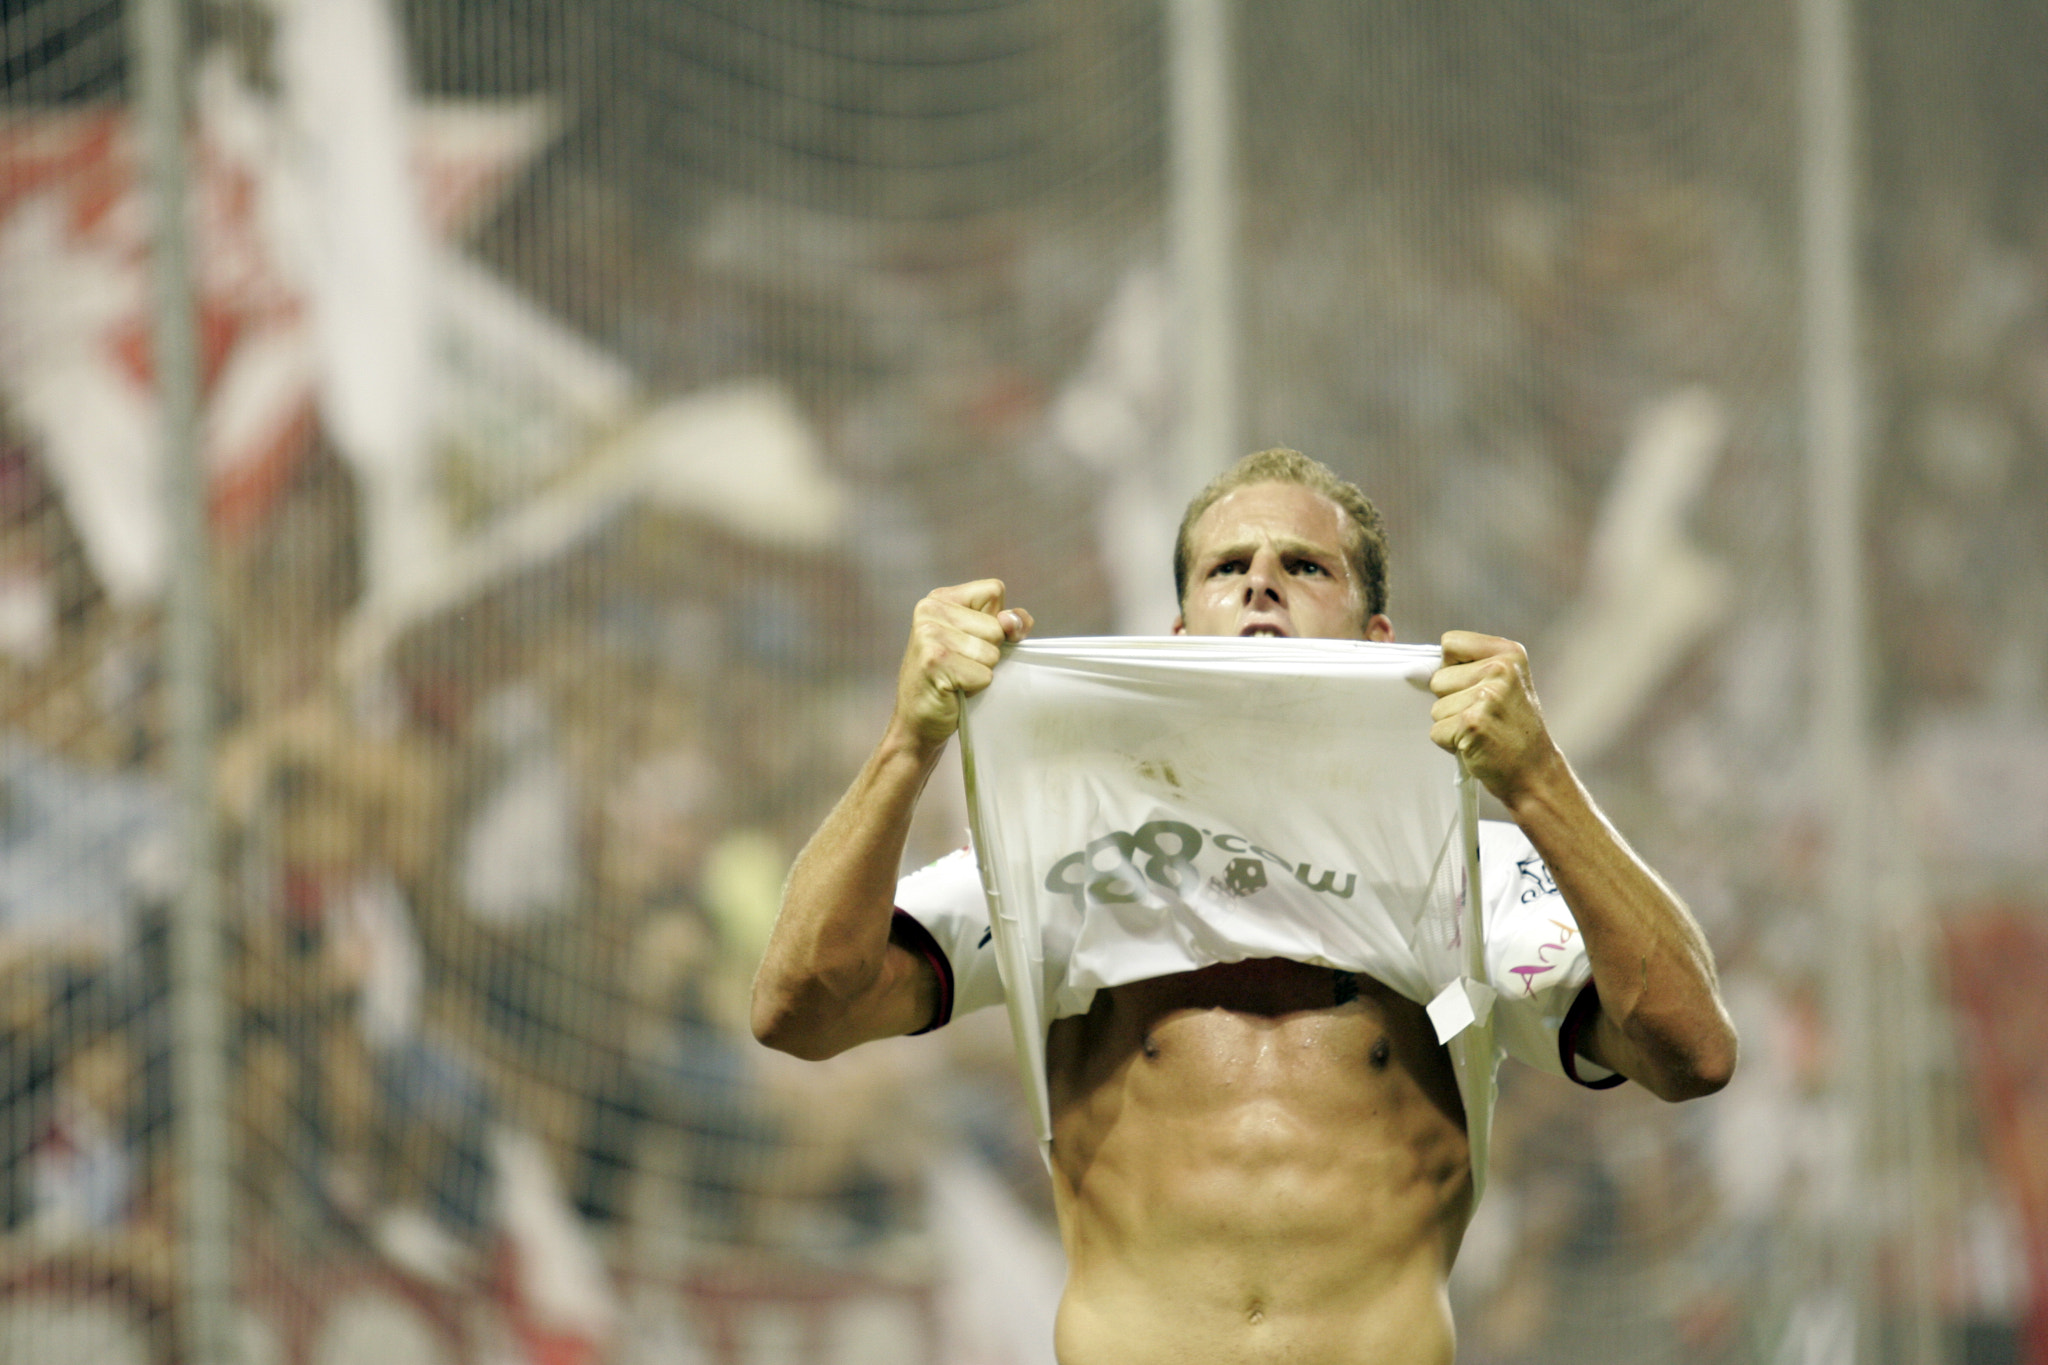 Kepa celebrating a goal. Taken at Sanchez Pizjuan stadium (Seville, Spain) on 29 August 2006 during